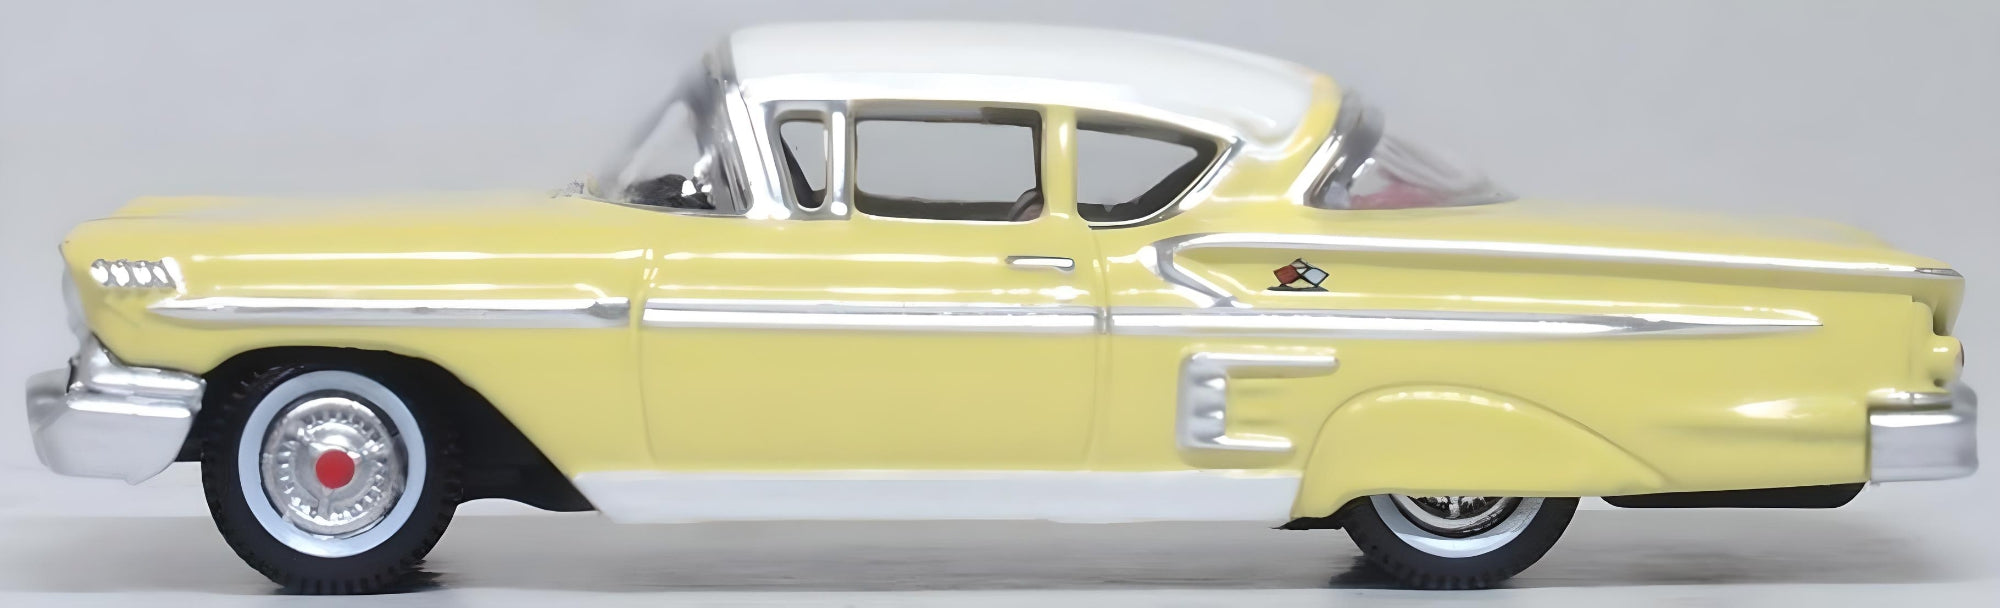 Oxford Diecast  87CIS58002 Chevrolet Impala Sport Coupe 1958 Colonial Cream and Snowcrest White 1:87 Scale Left